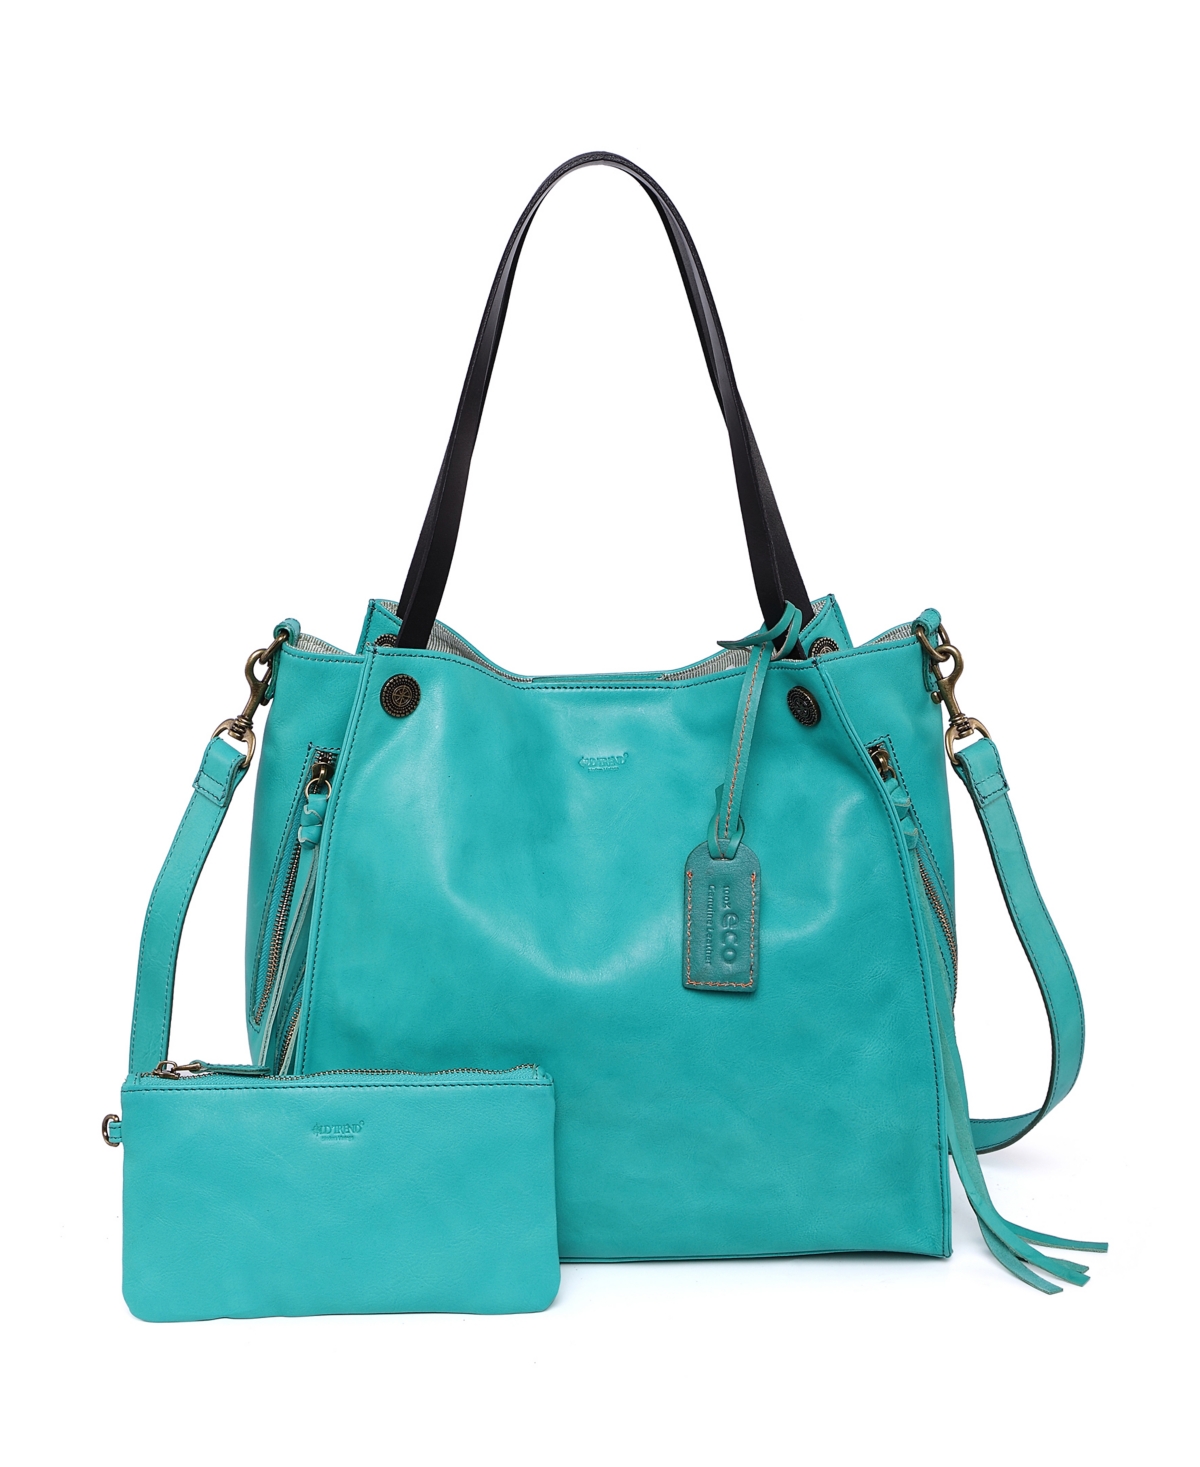 Women's Genuine Leather Daisy Tote Bag - Aqua